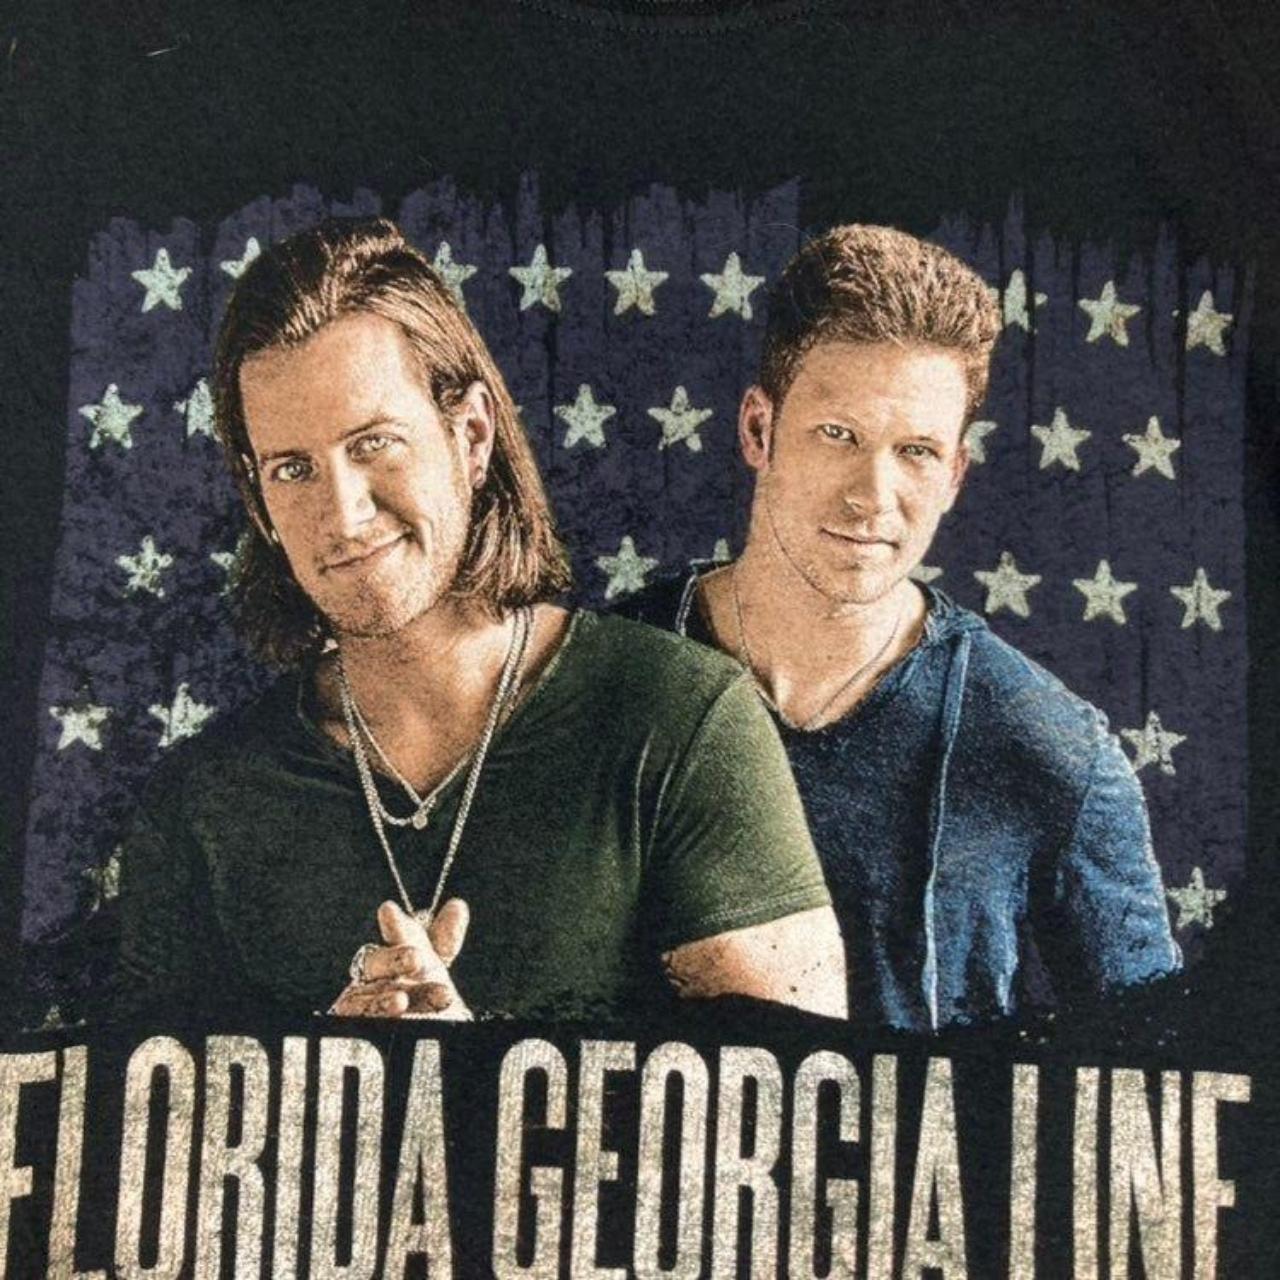 Product Image 3 - Item: Florida Georgia Line FGL